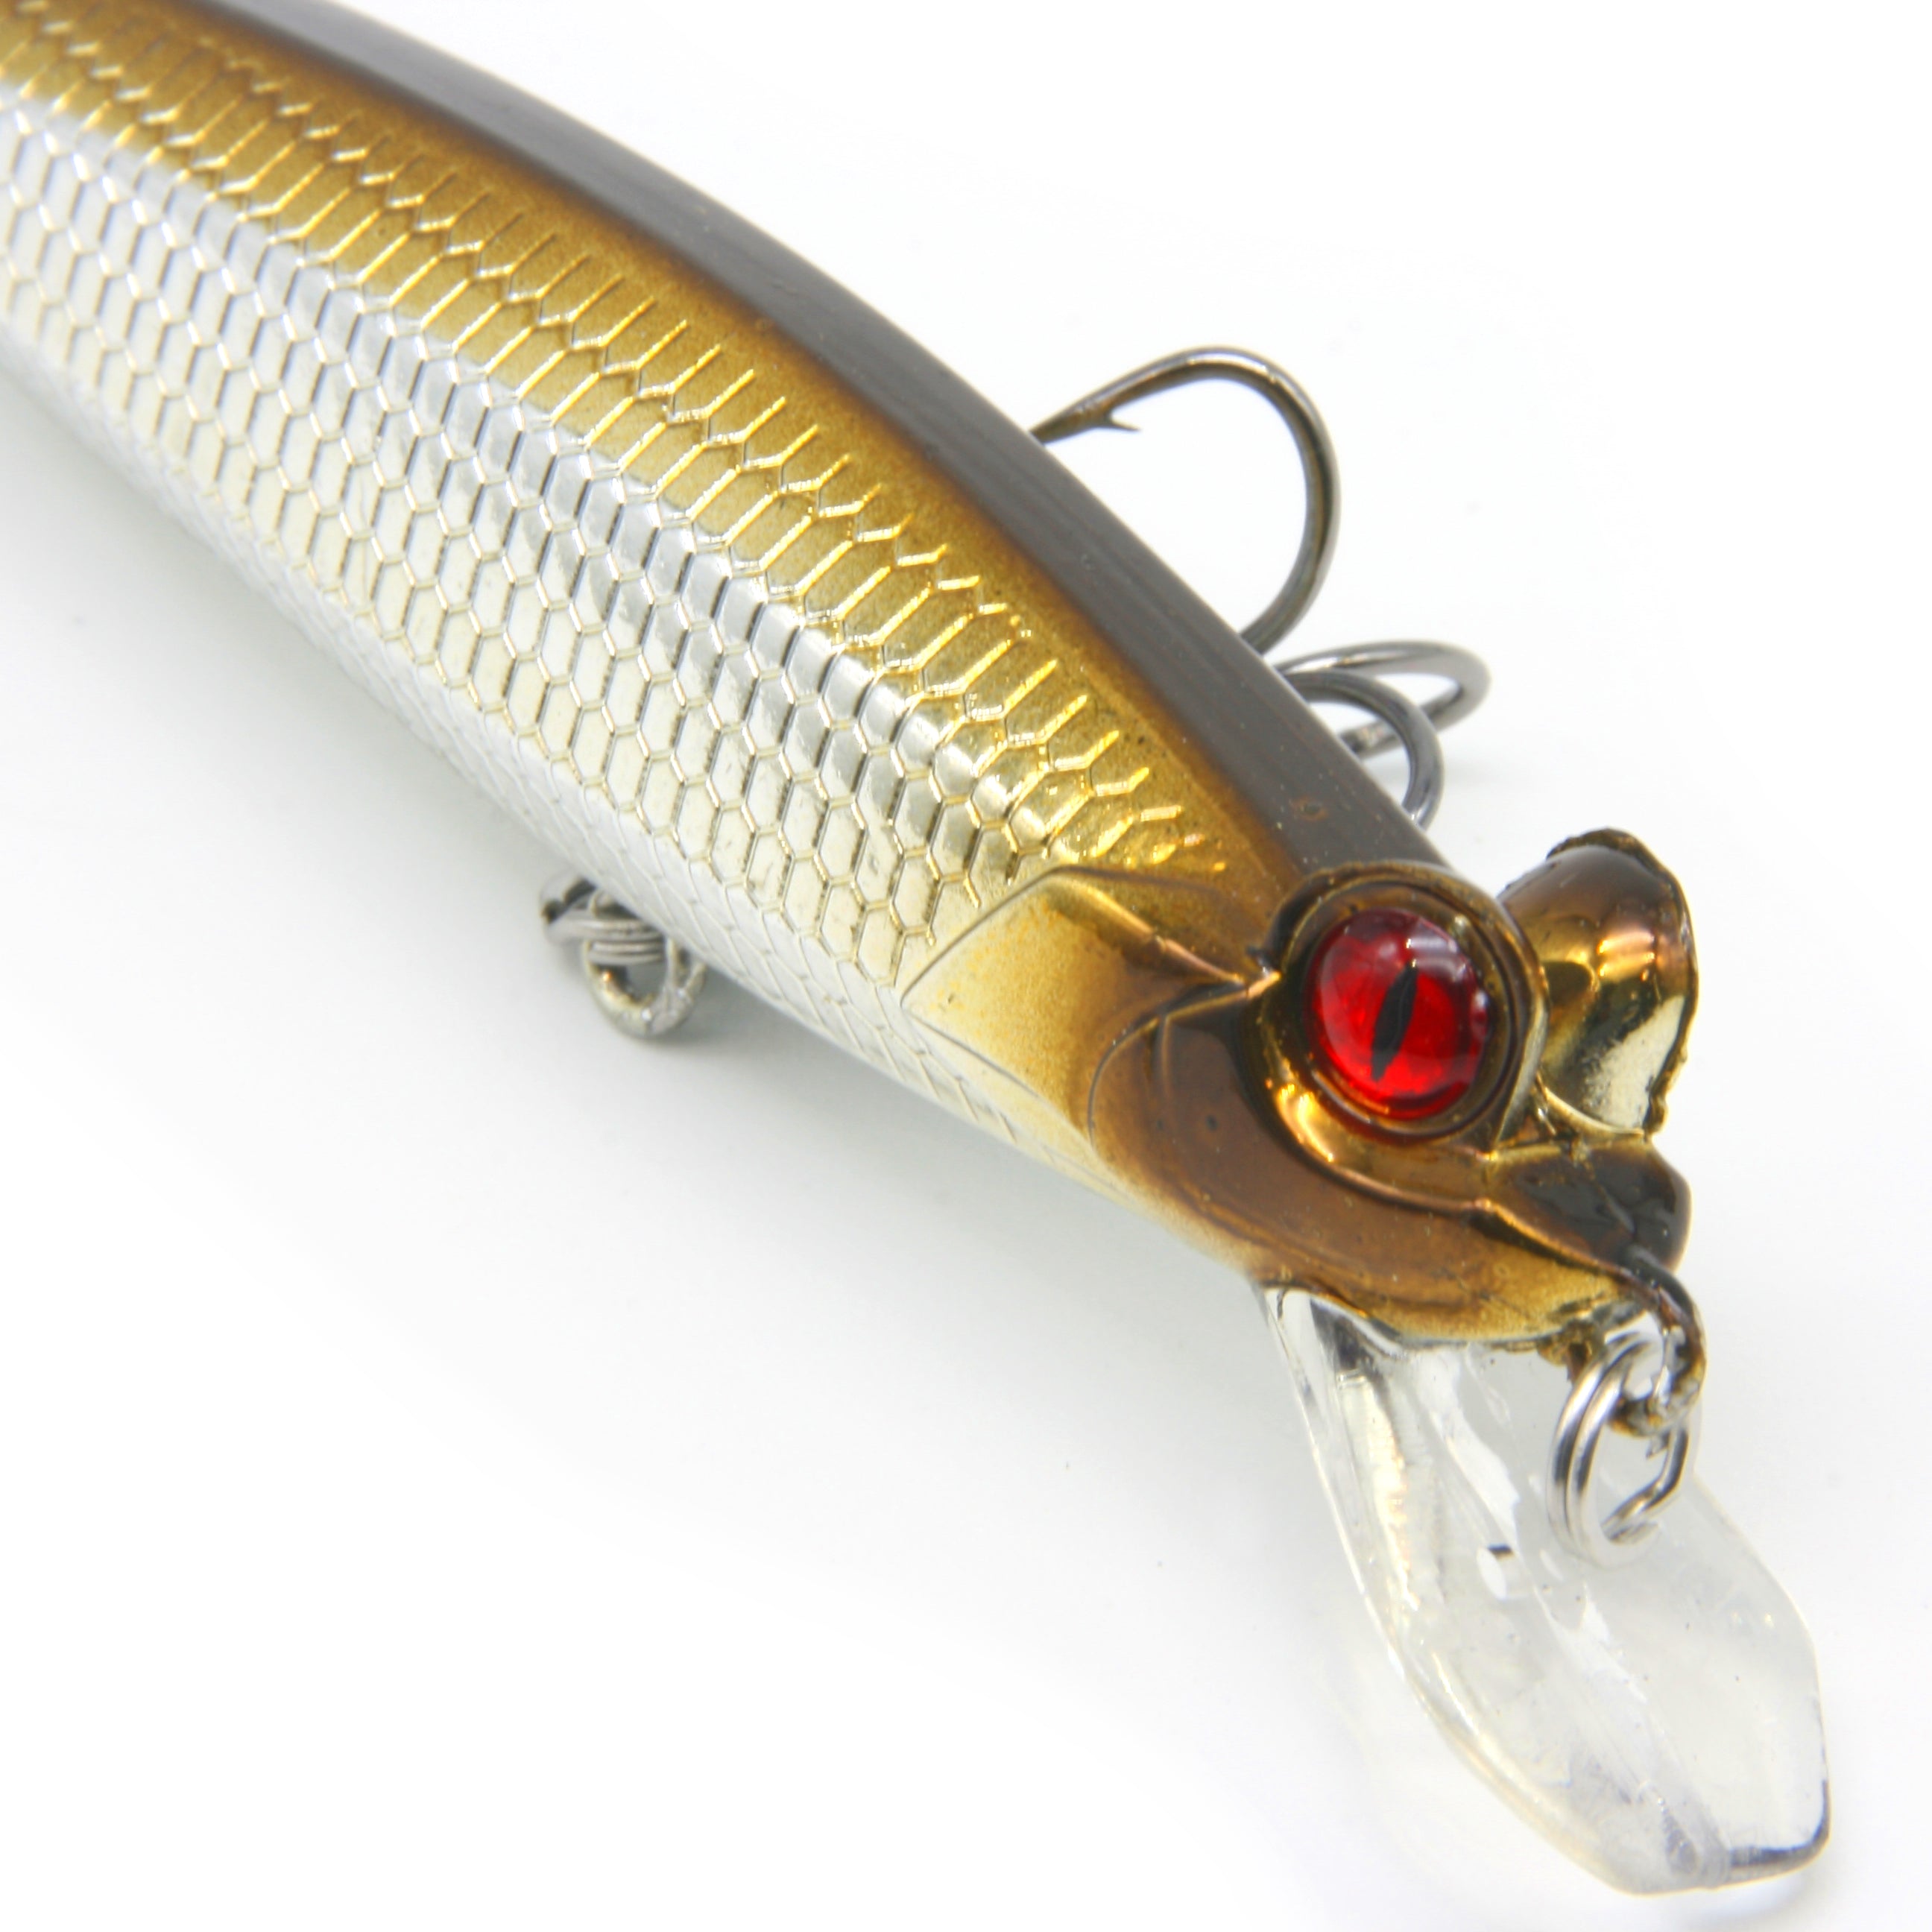 Banshee 43mm 5g Jerkbait Minnow Fishing Luresartificial Hard Bait